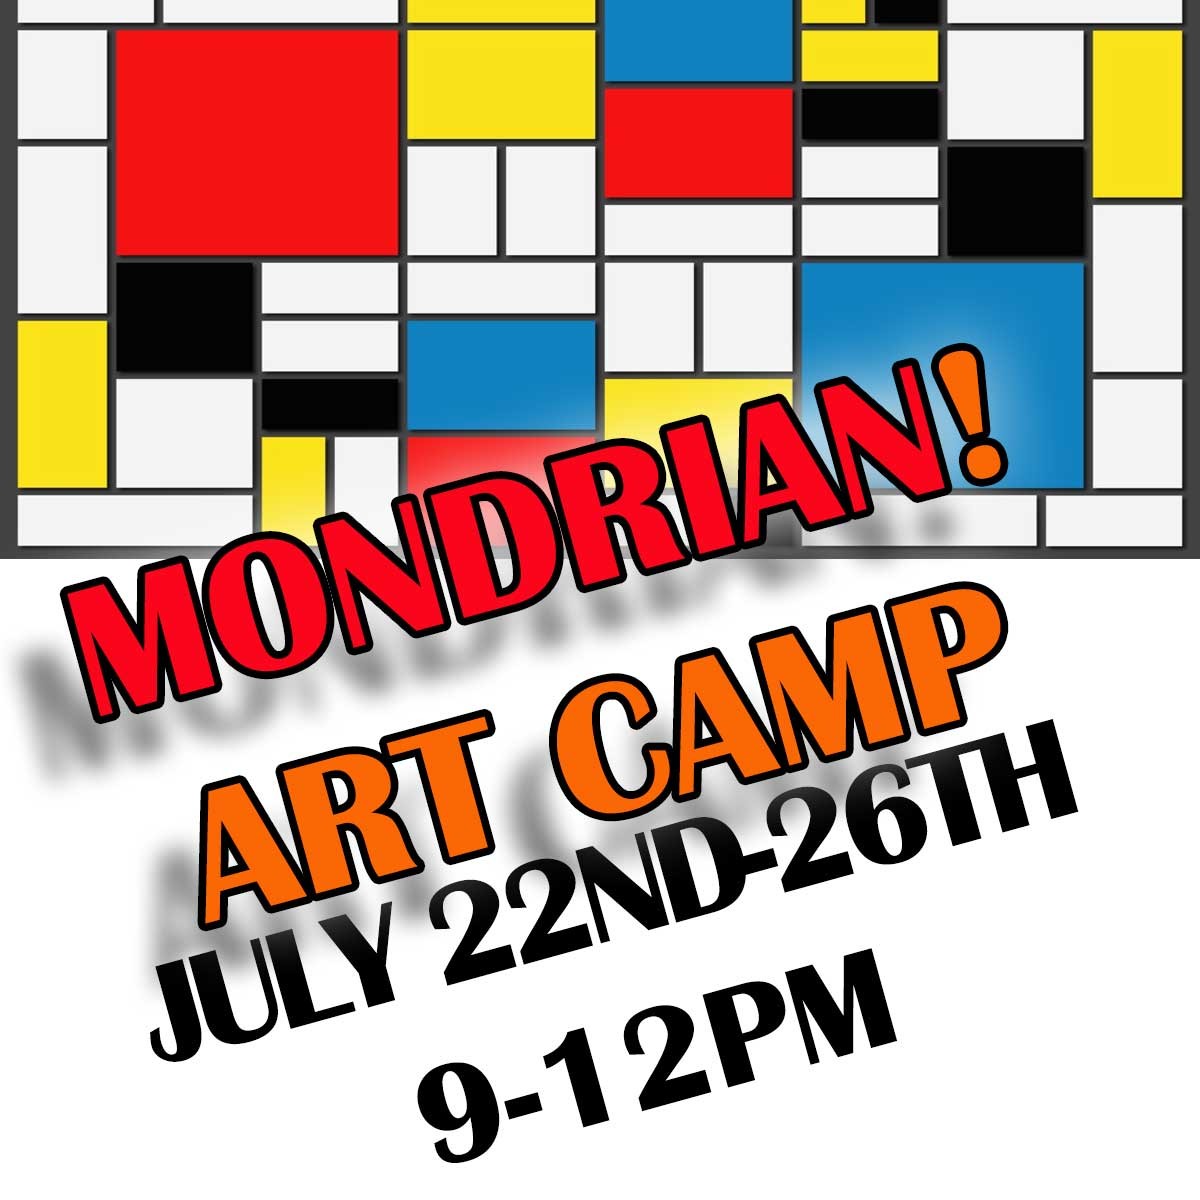 Music With Mondrian! Summer Art Camp!